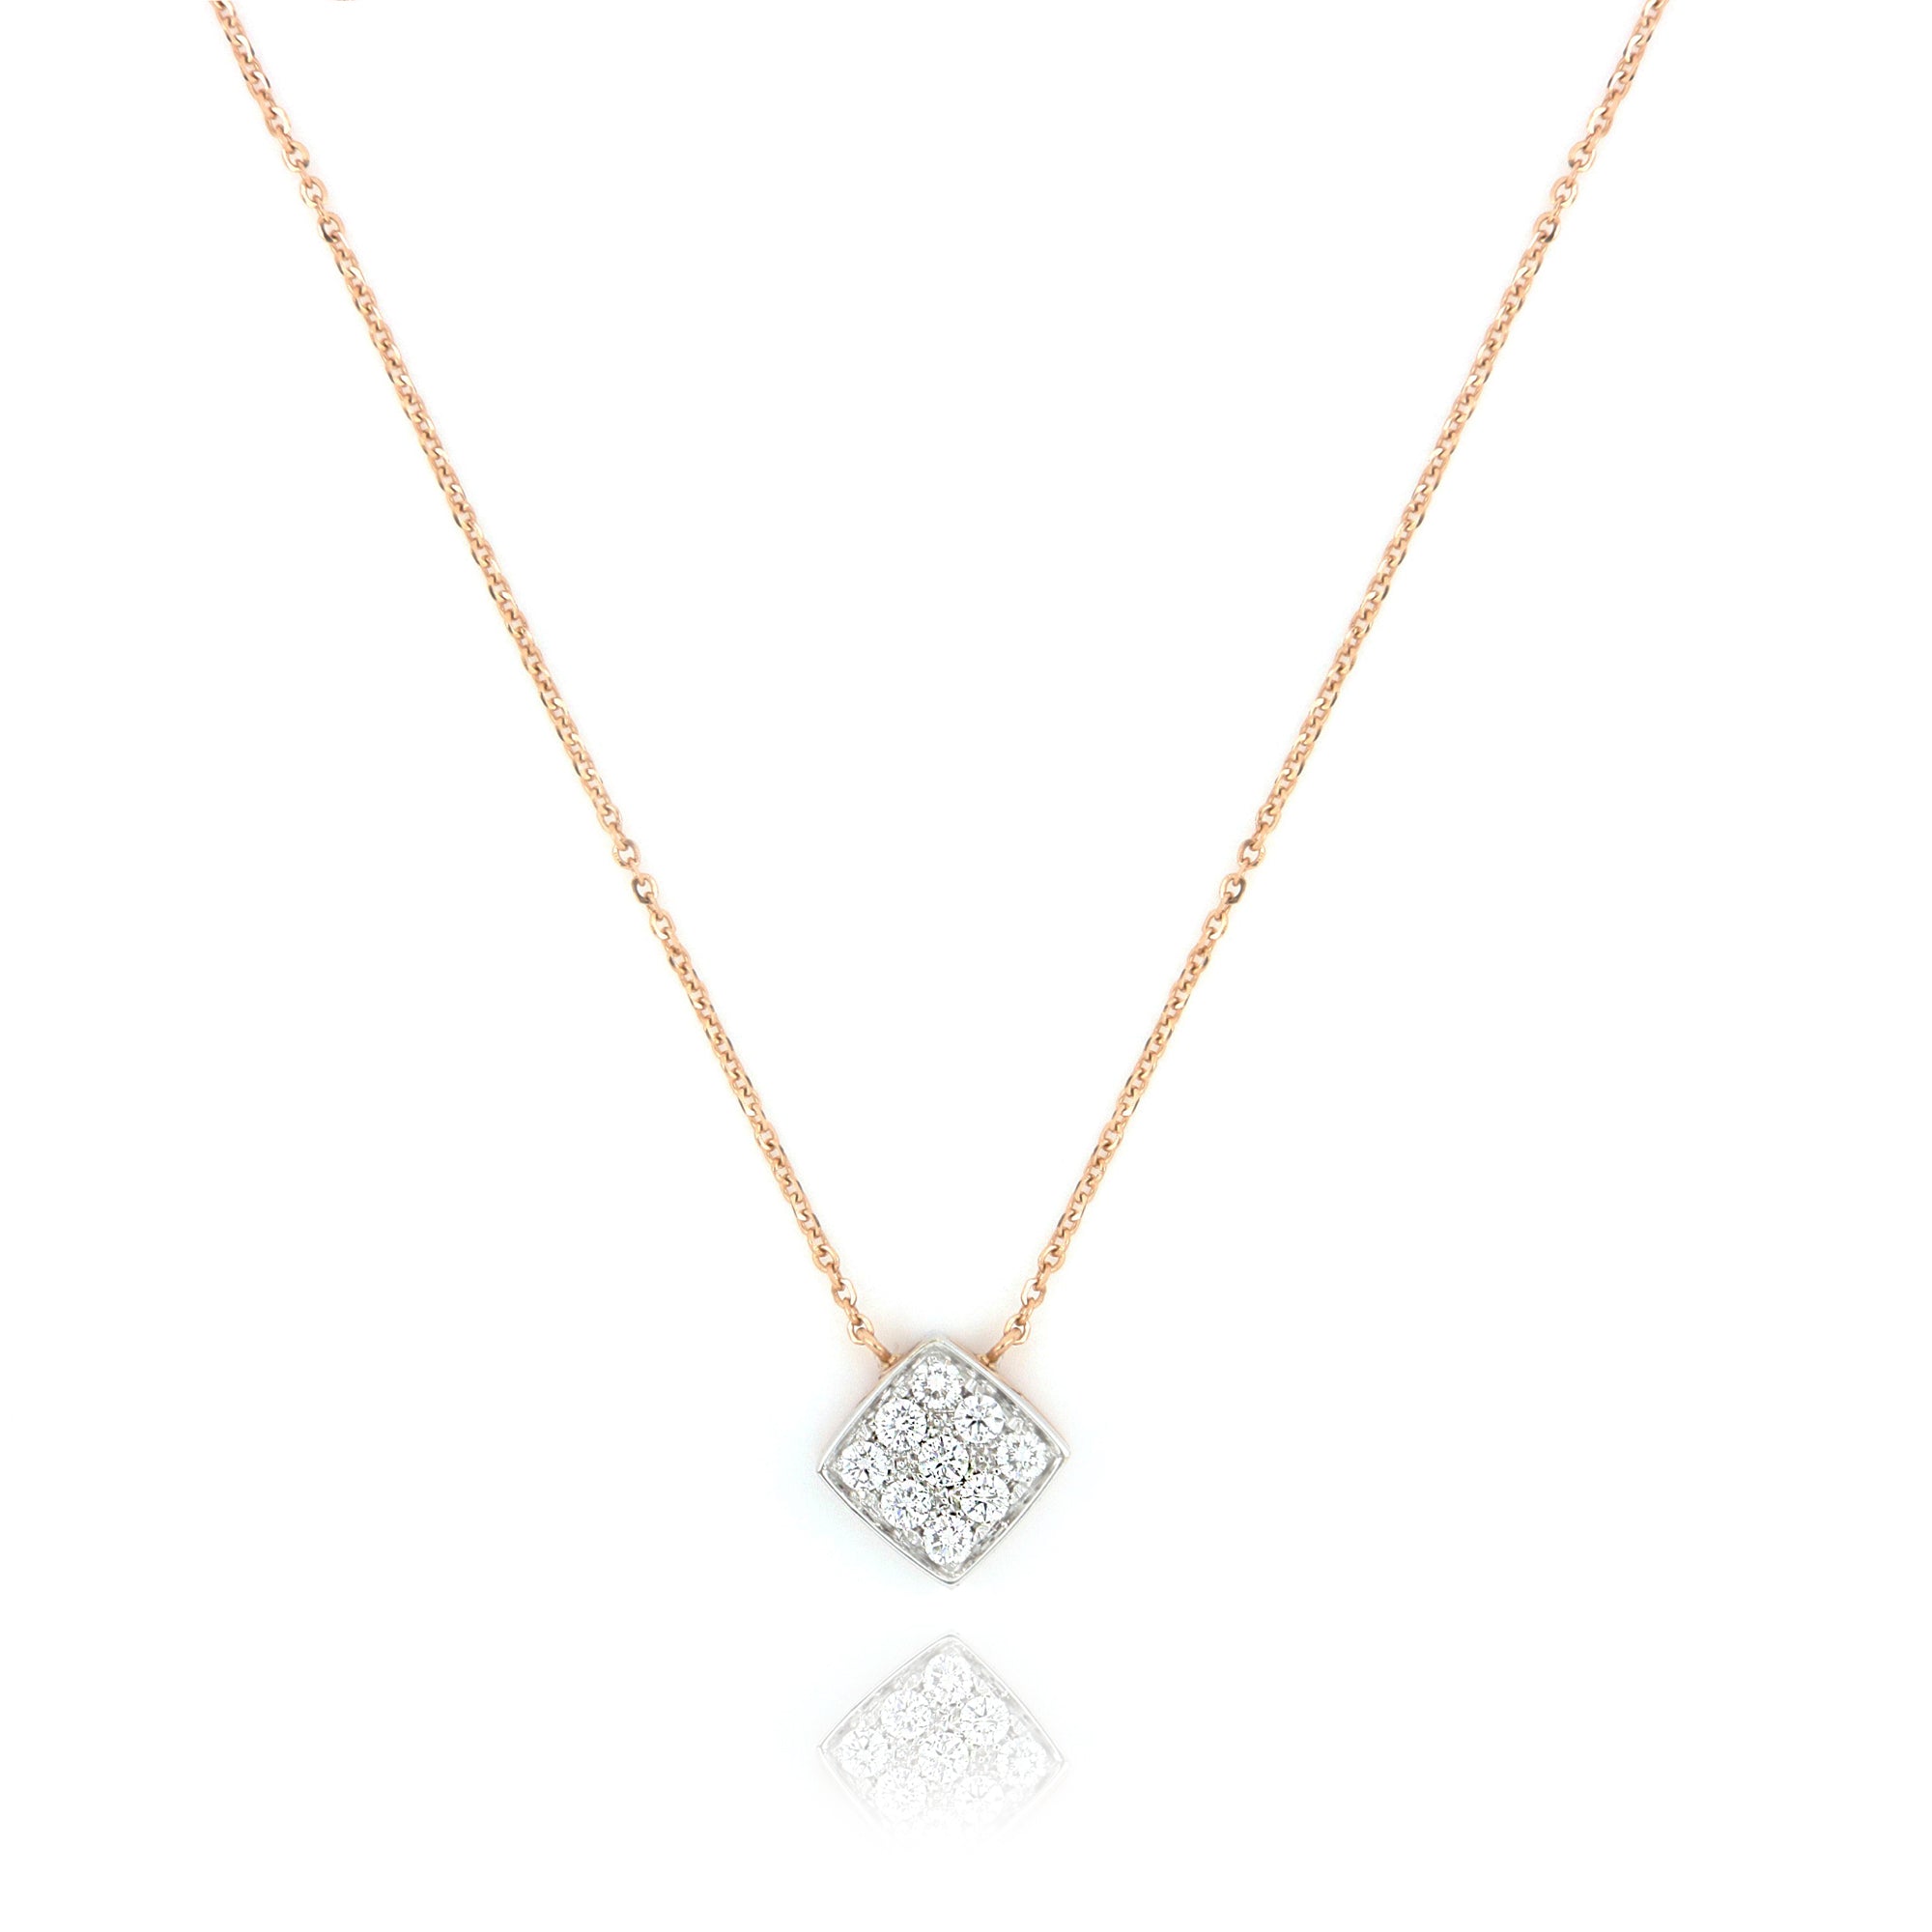 Le Secret Necklace With Squared Pendant of Diamonds